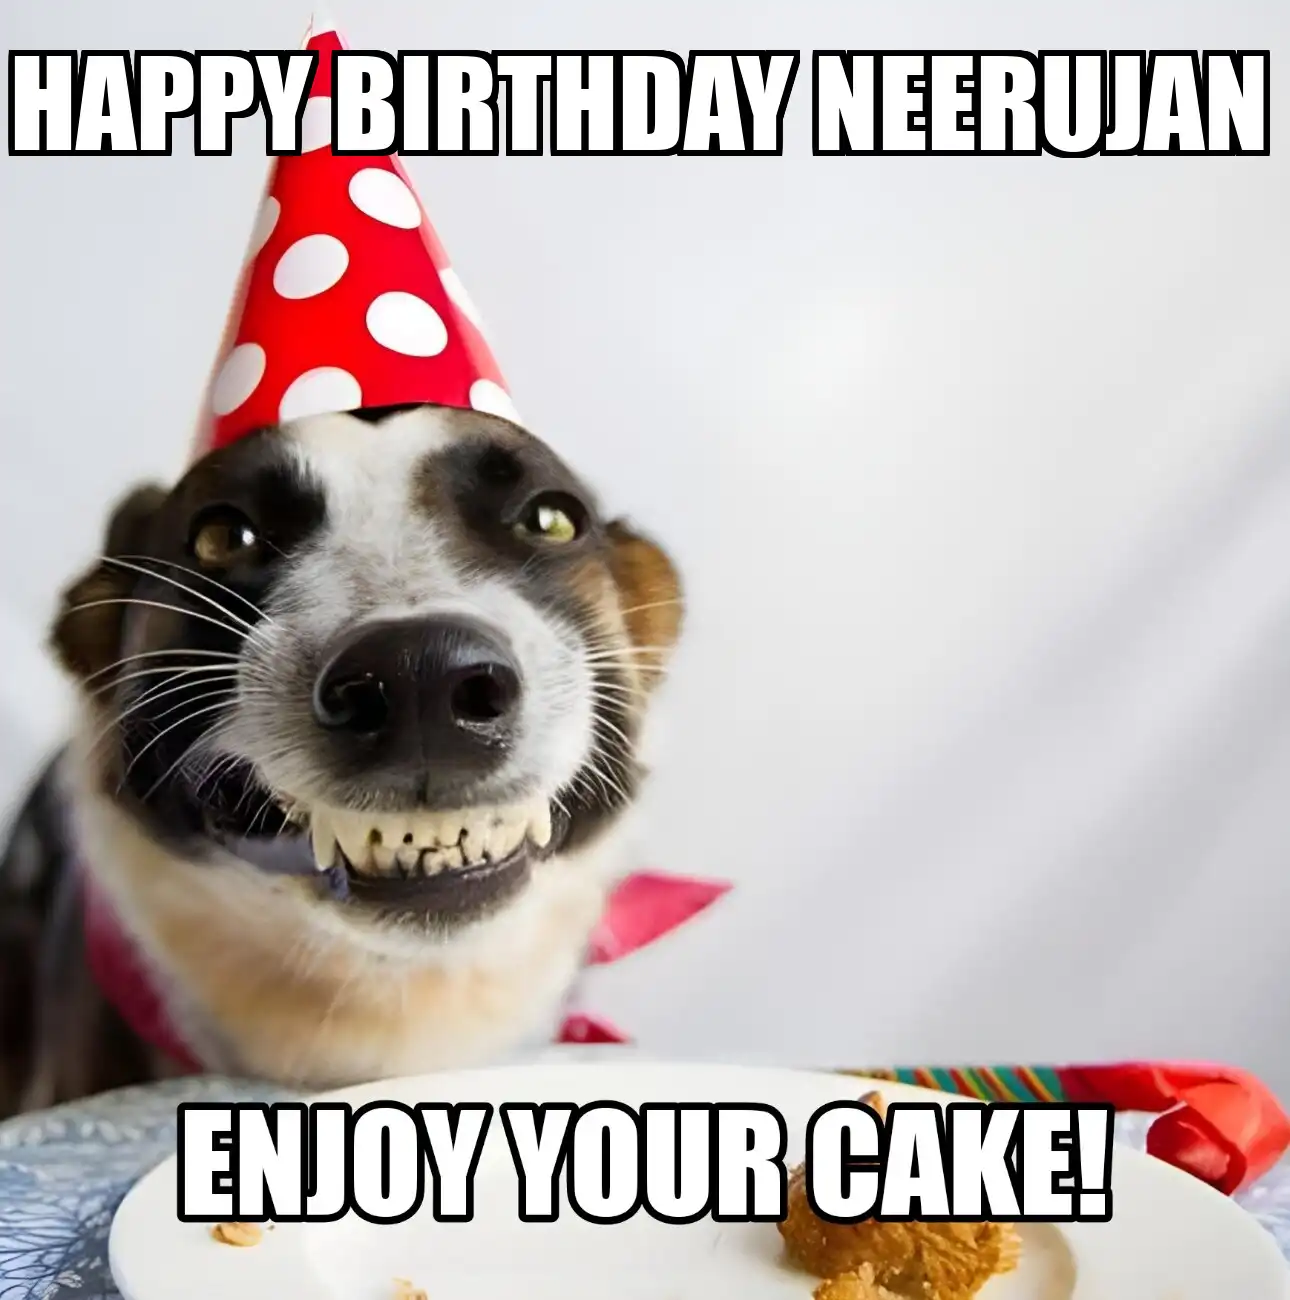 Happy Birthday Neerujan Enjoy Your Cake Dog Meme